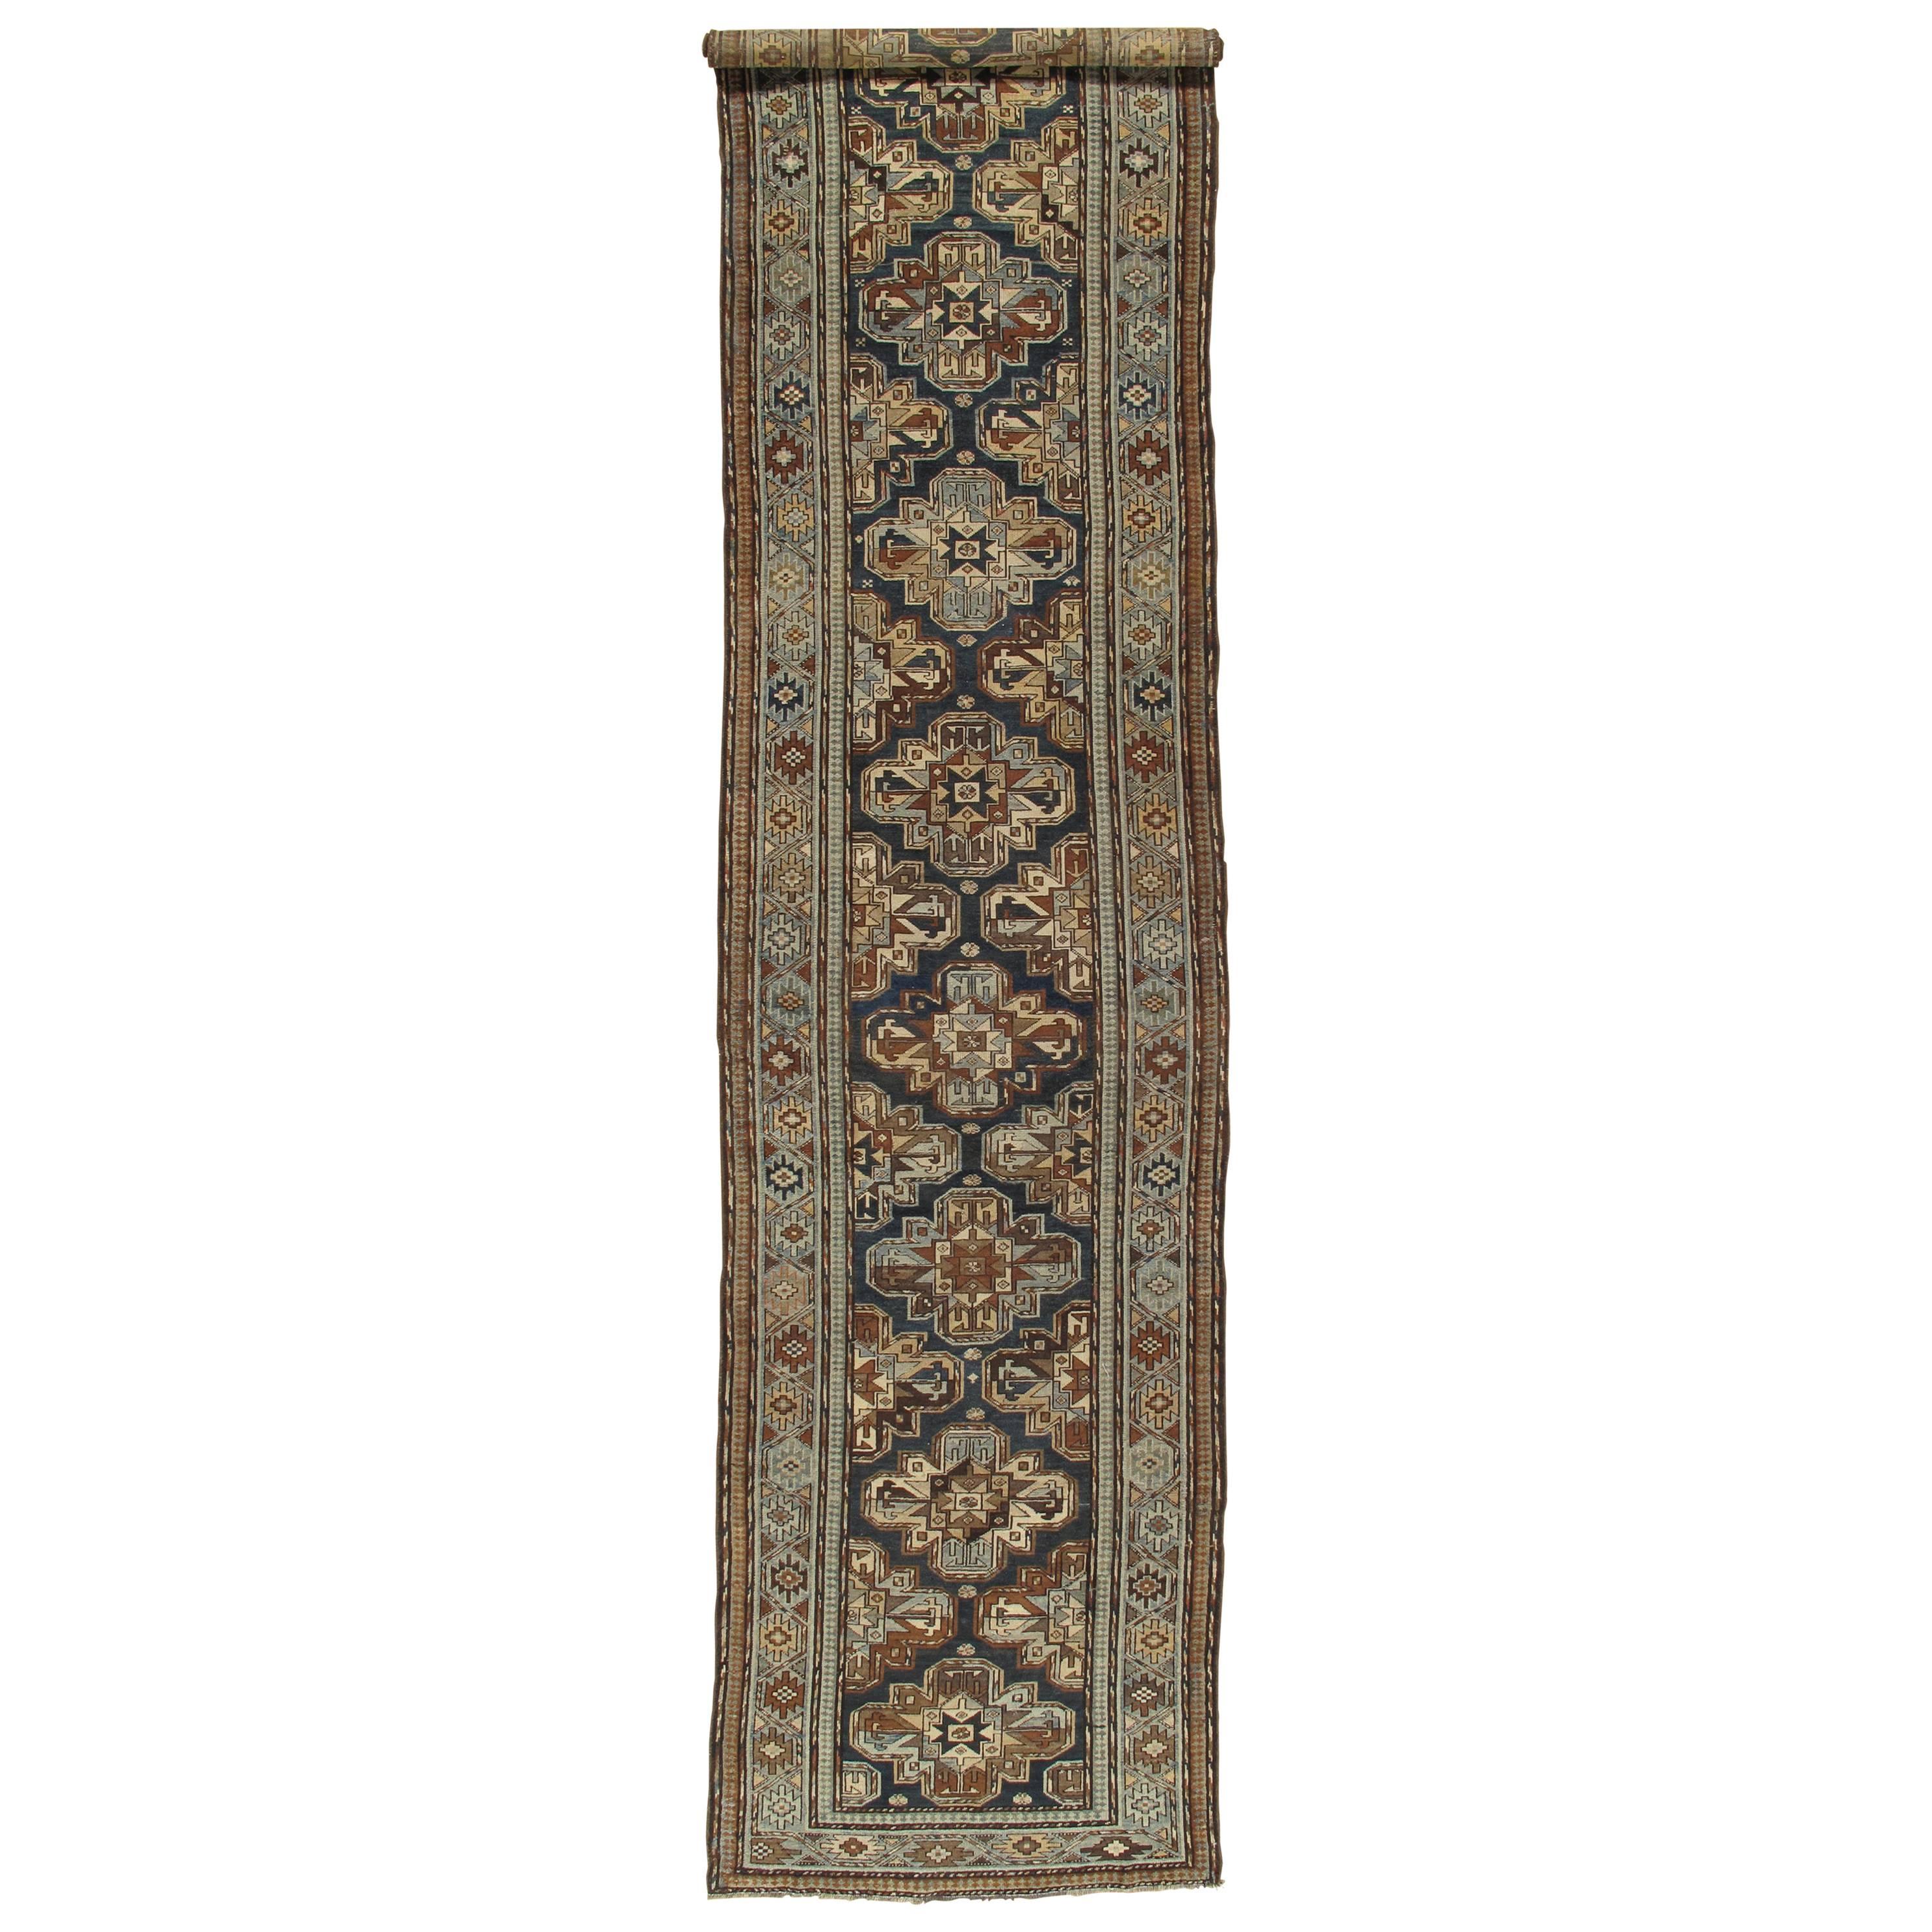 Antique Persian Malayer Runner, Handmade Oriental Rugs, Navy, Light Blue, Brown